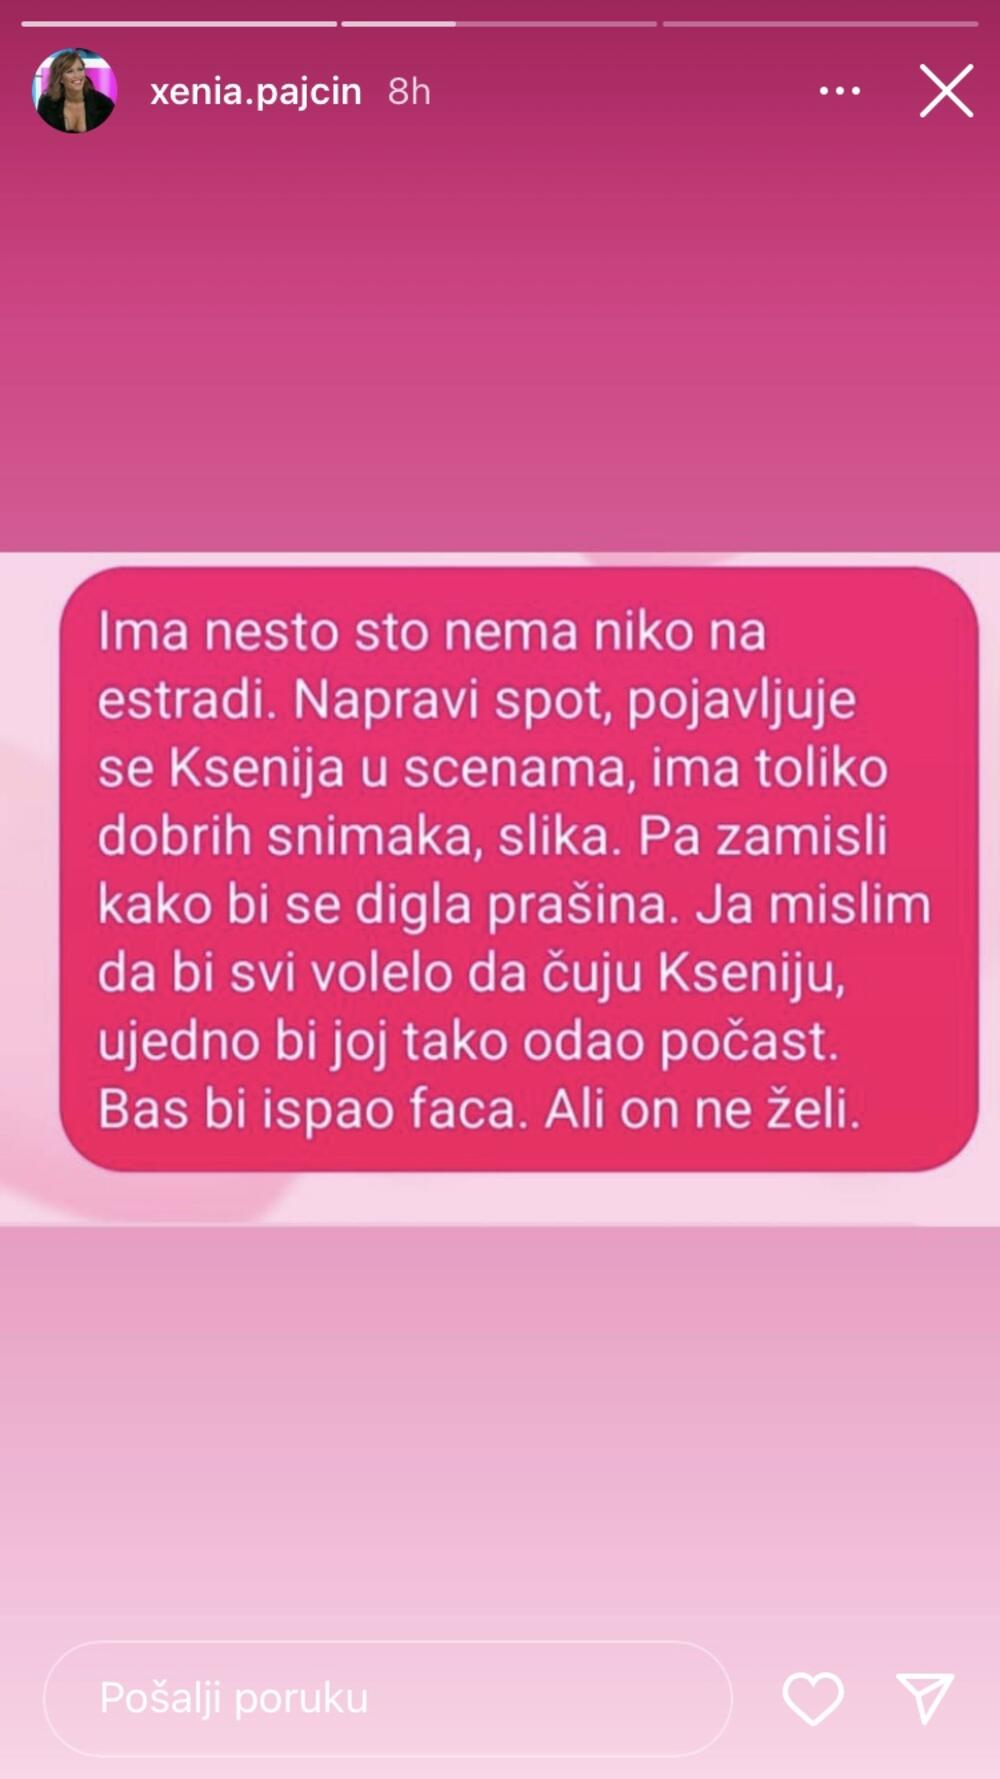 Ksenija Pajčin, Željko Šašić